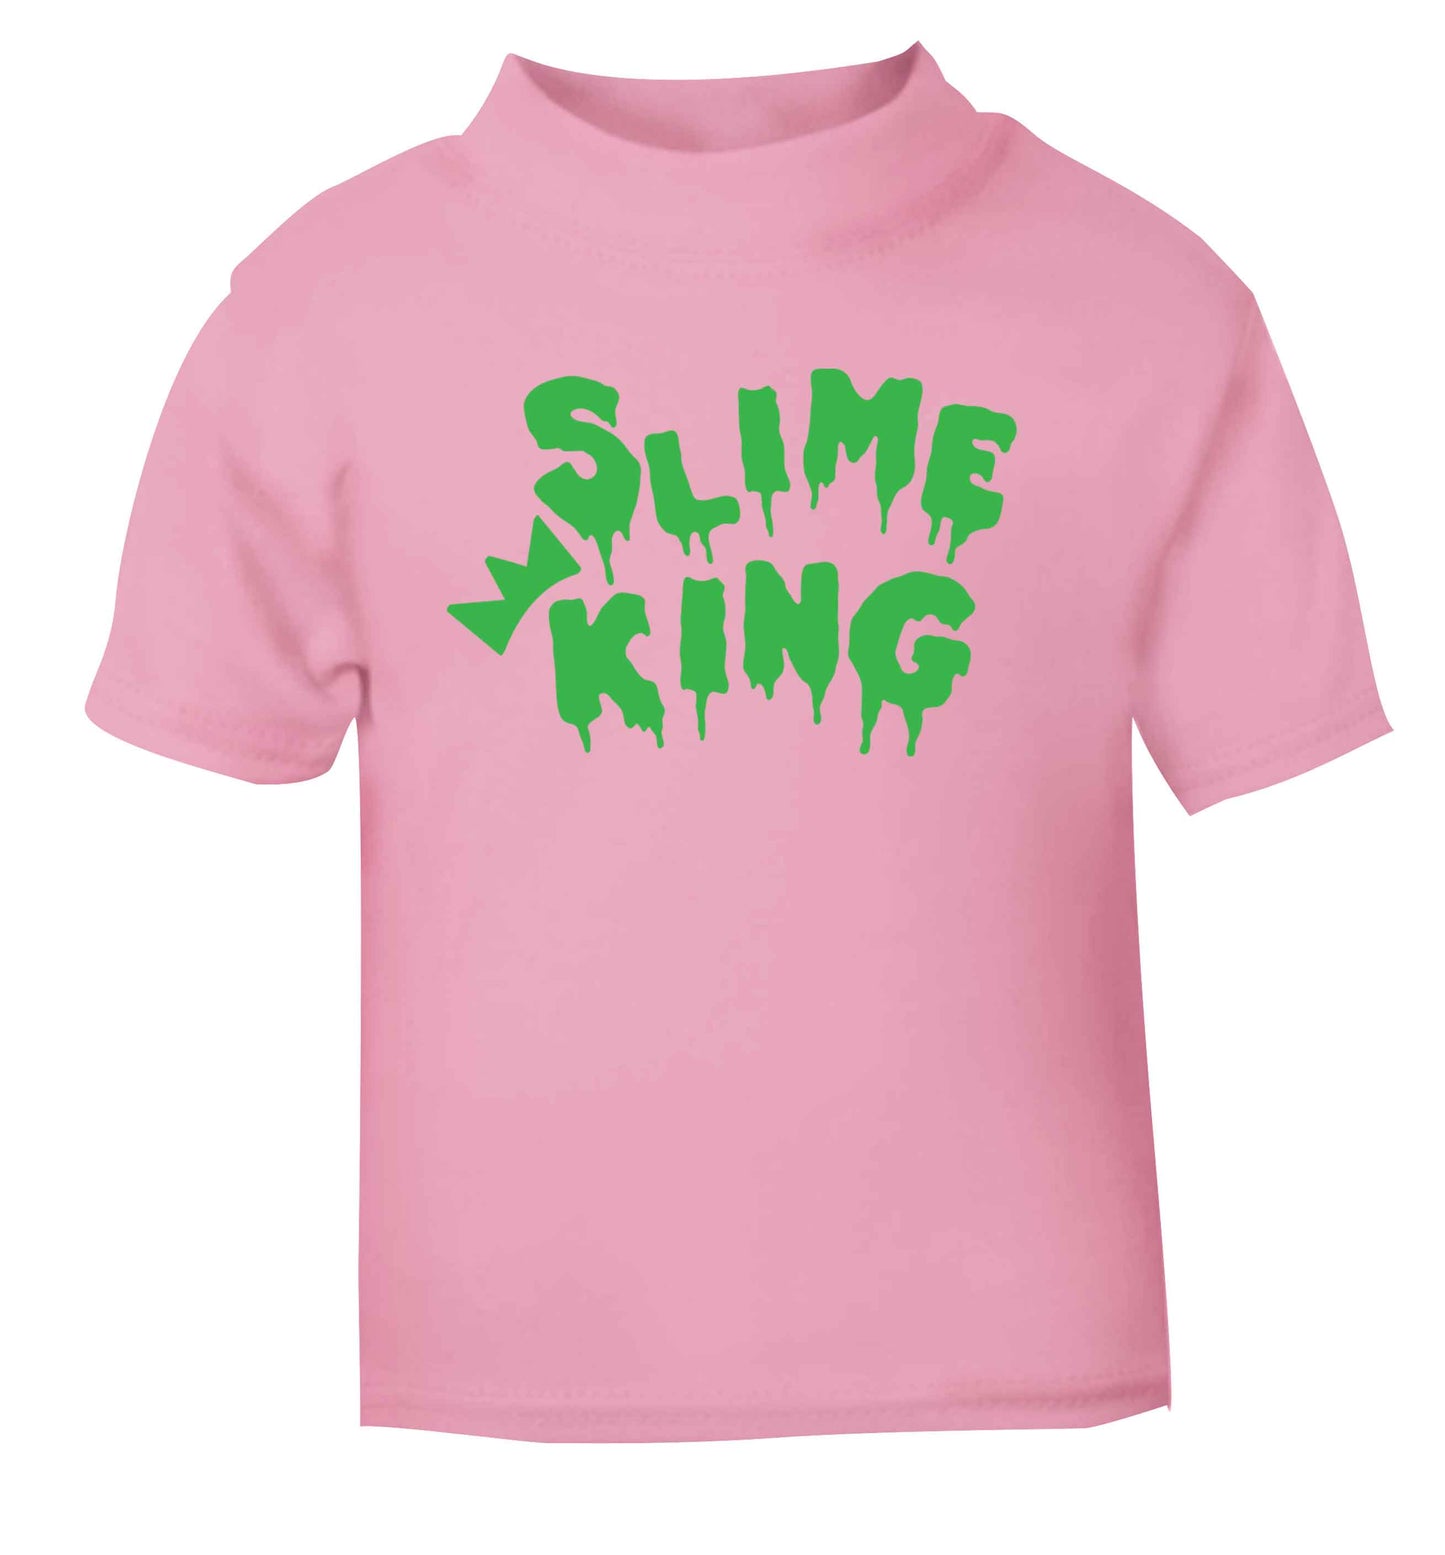 Neon green slime king light pink baby toddler Tshirt 2 Years